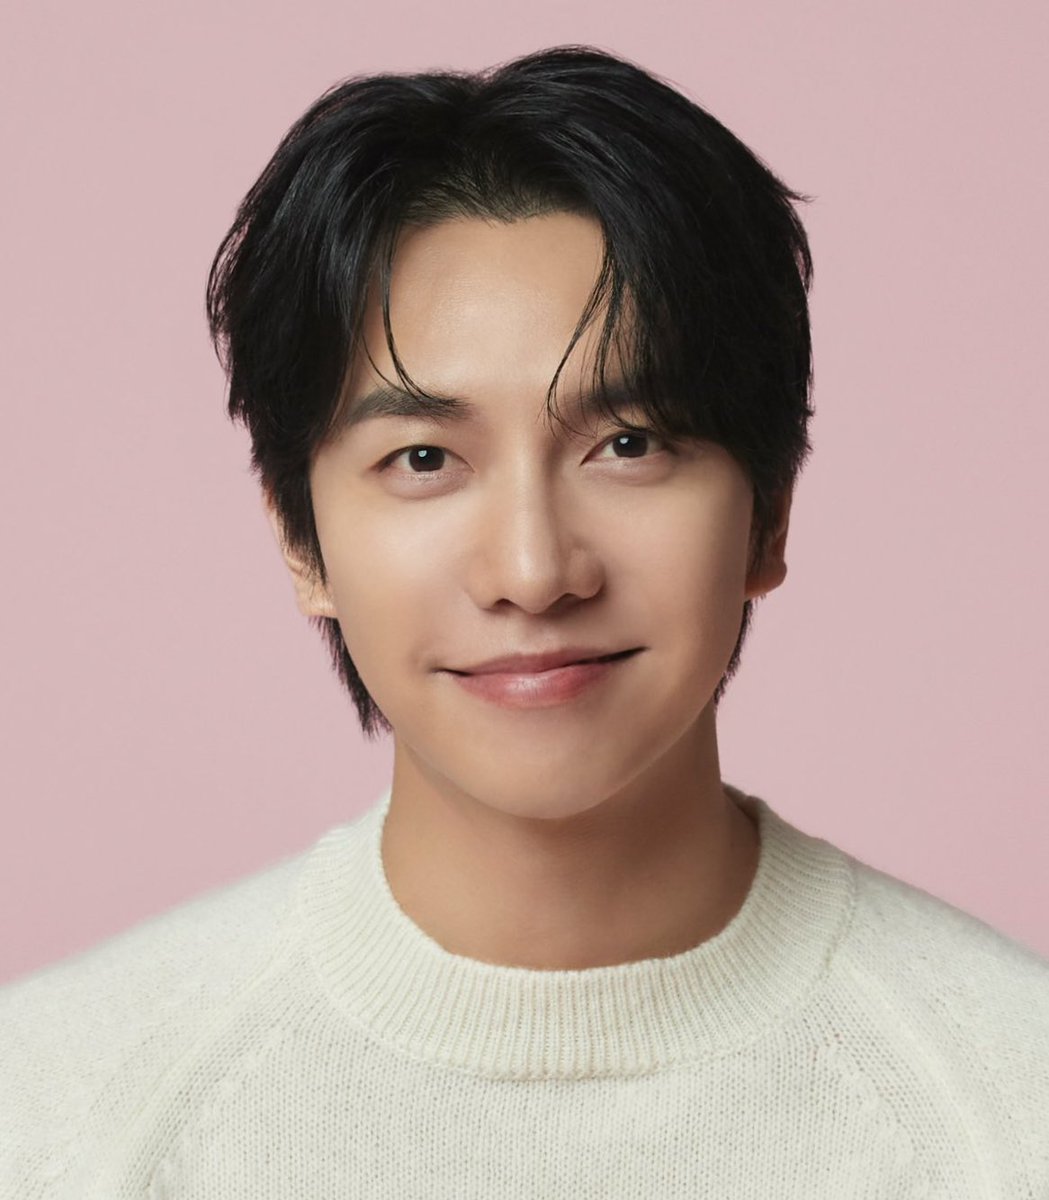 my pretty boy with his pretty hair, his pretty eyes,his pretty lil dimple and his pretty smile!☺️✨ #LeeSeungGi #이승기